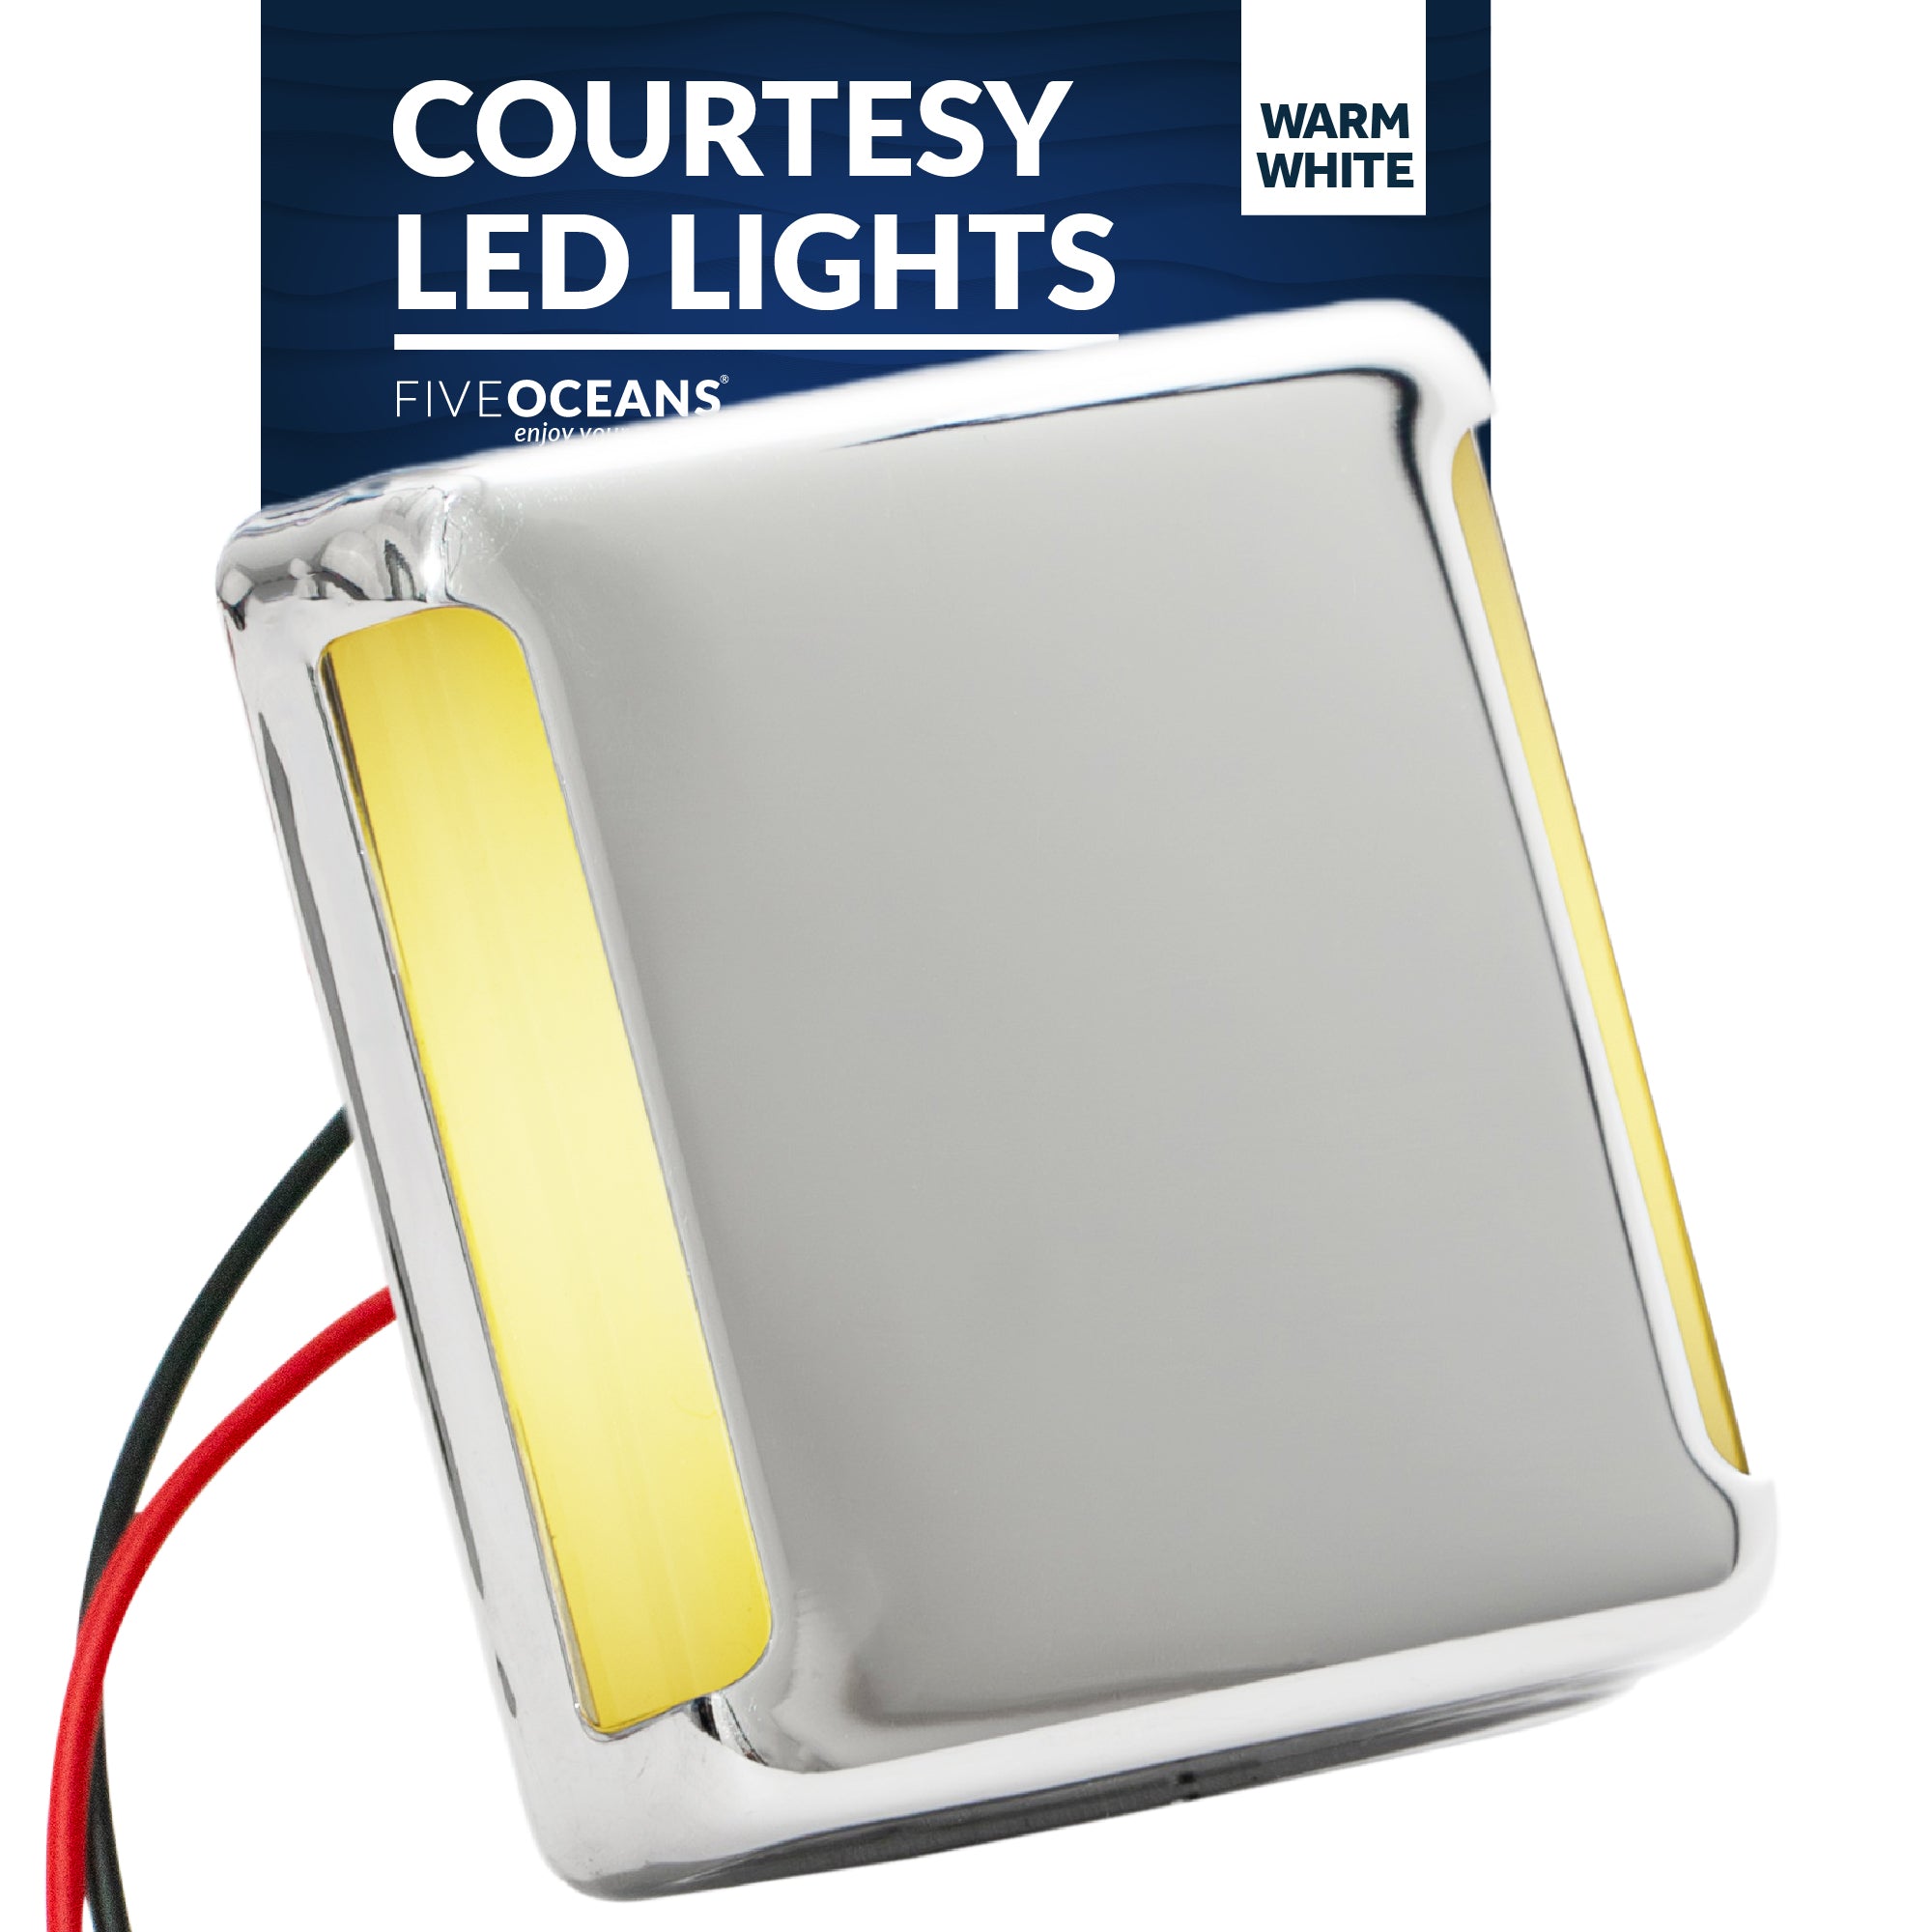 LED Courtesy Companion Way Light, Square, Warm White - FO4457